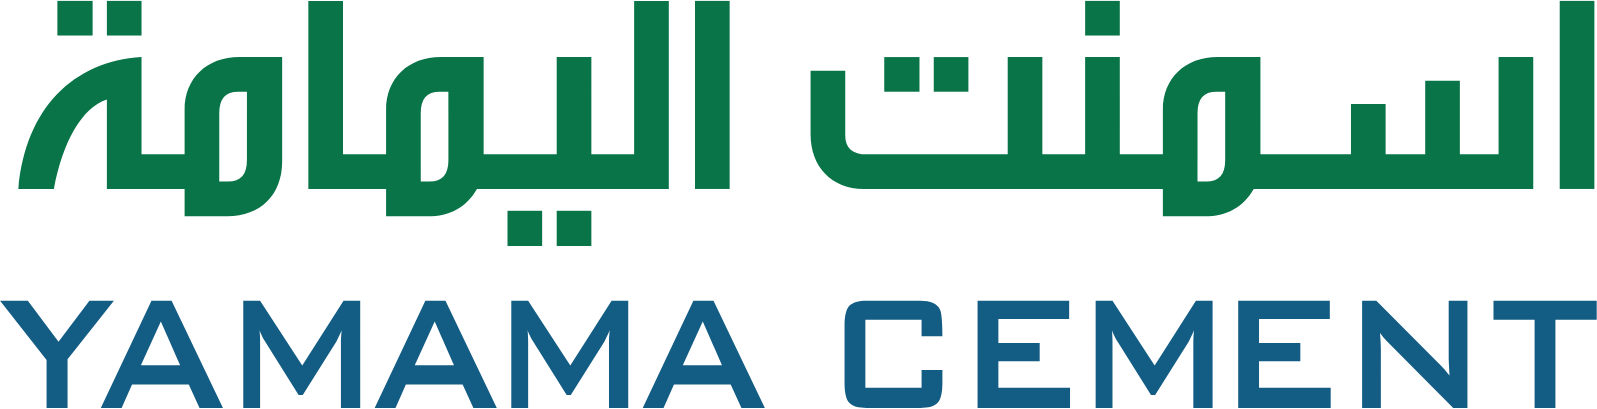 Yamama Saudi Cement Company logo (transparent PNG)